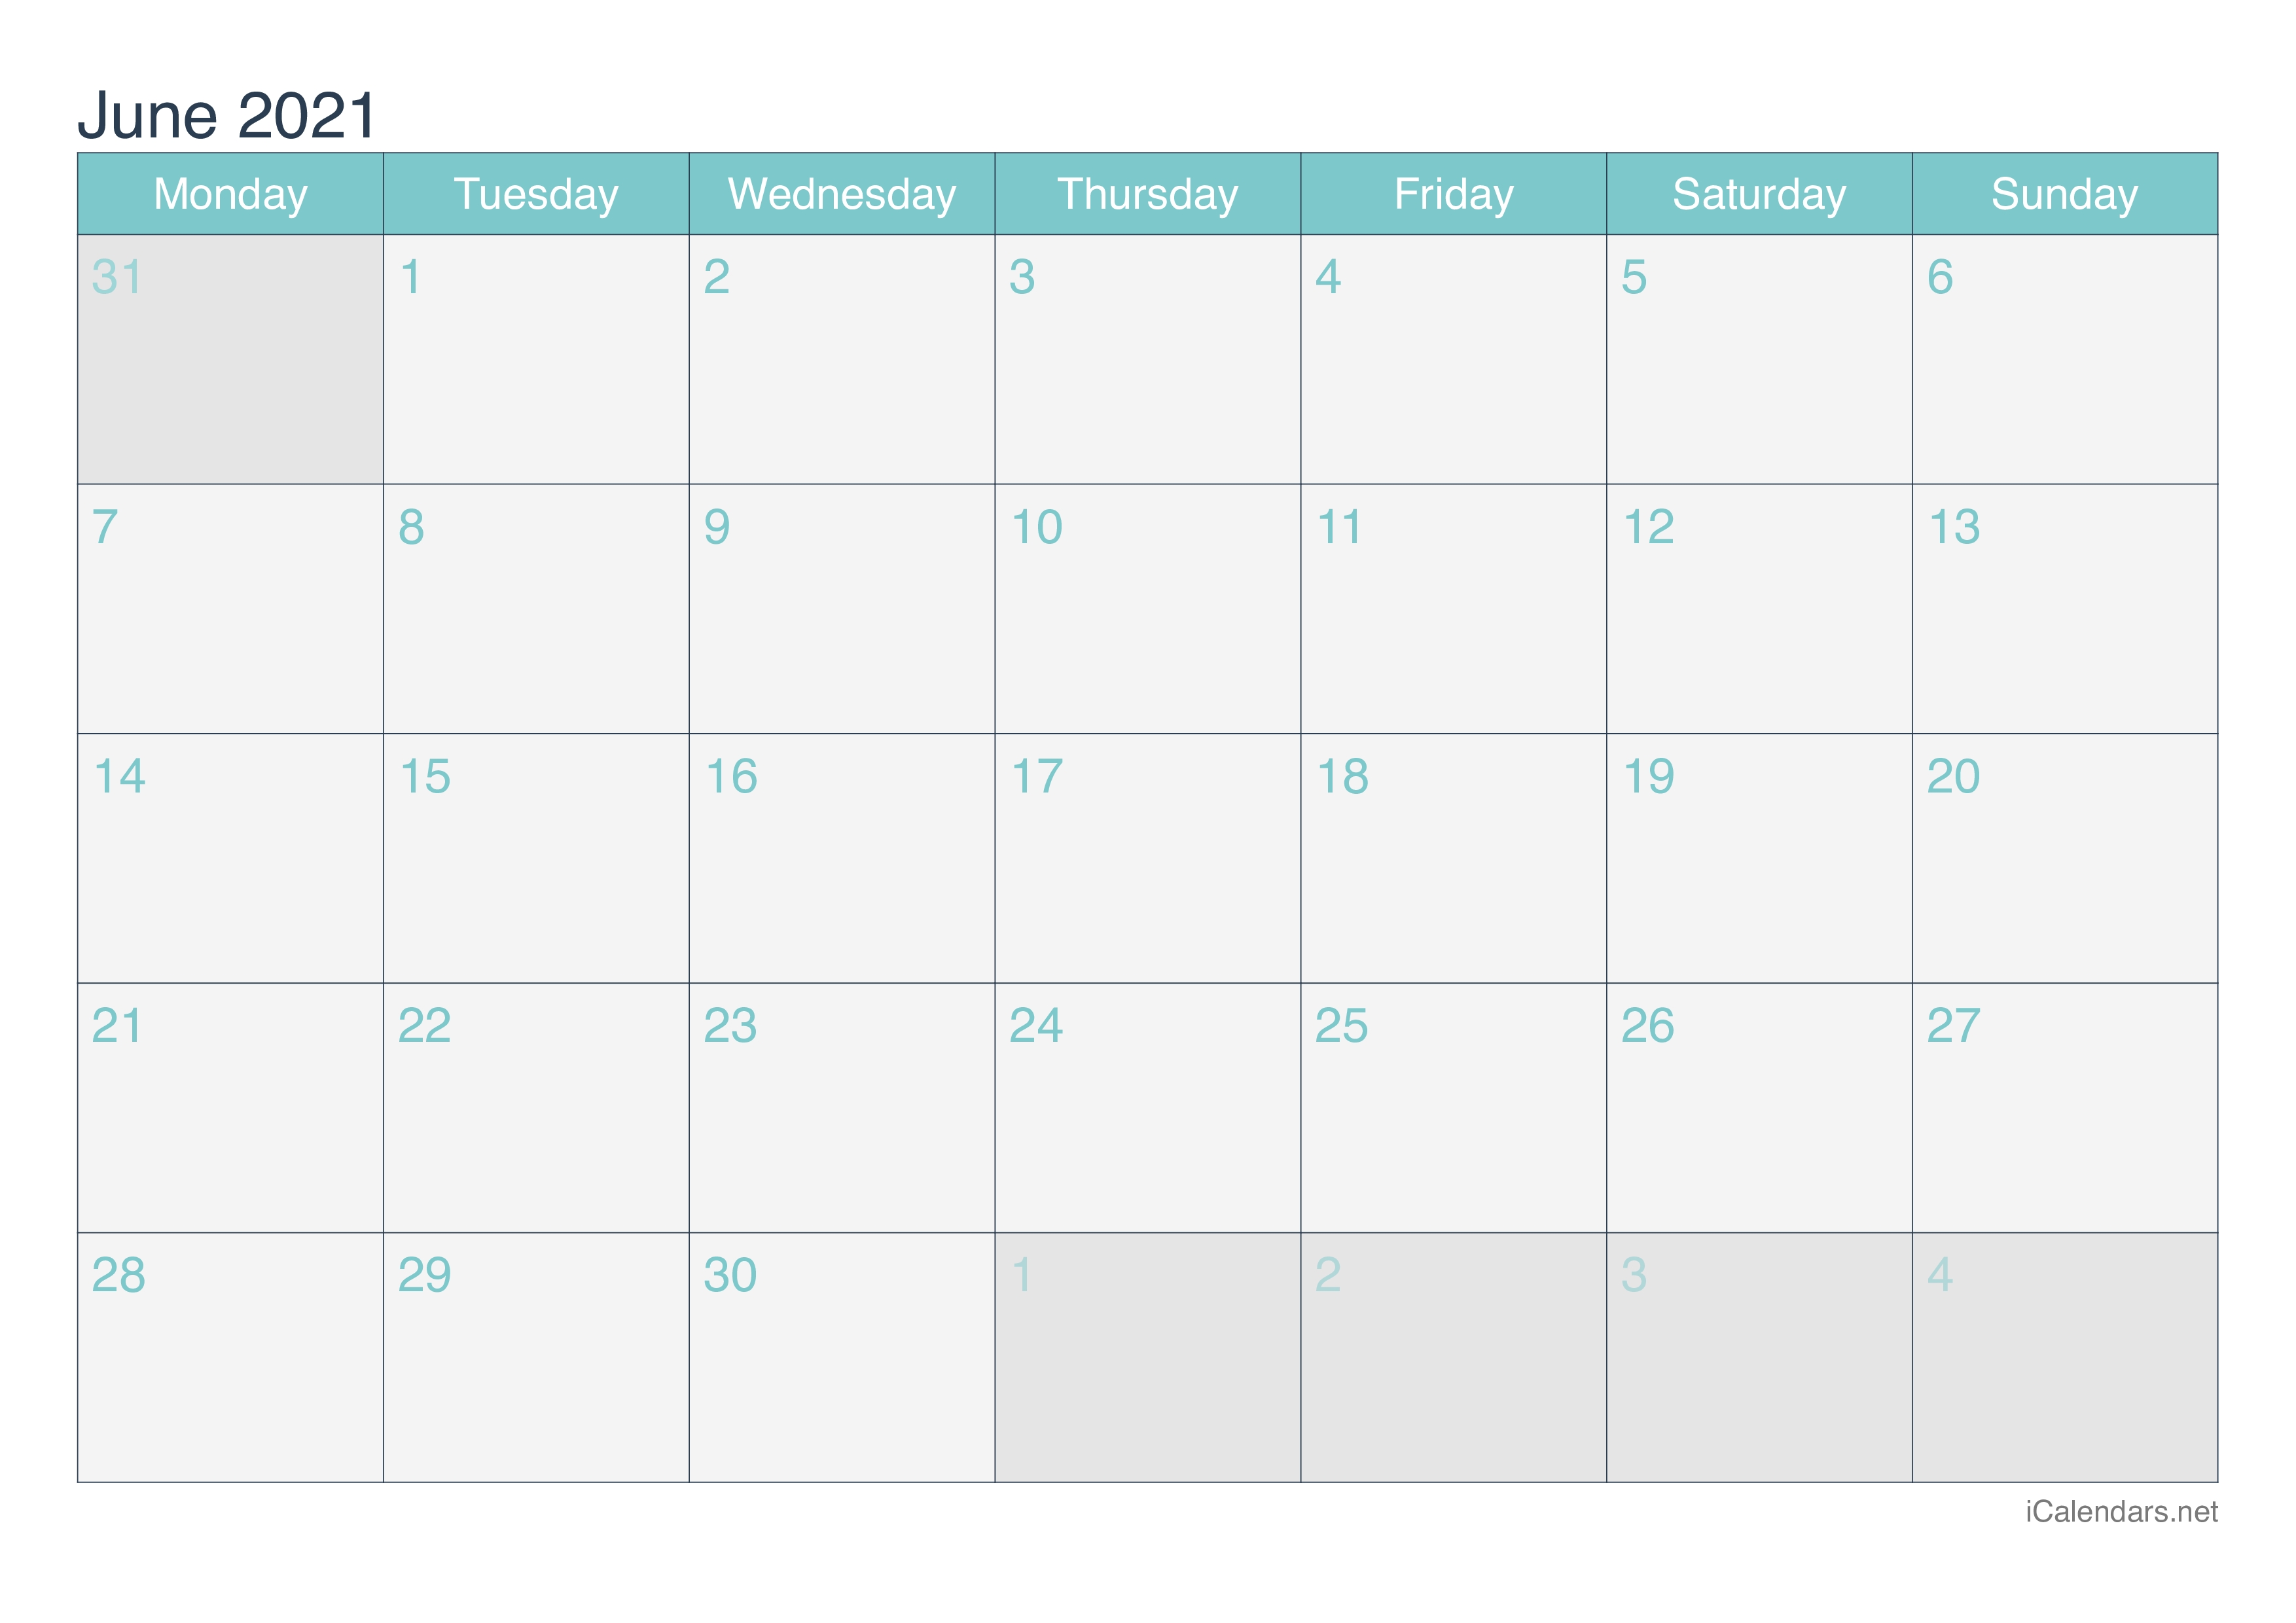 June 2021 Printable Calendar - Icalendars June 2021 Calendar Template Excel